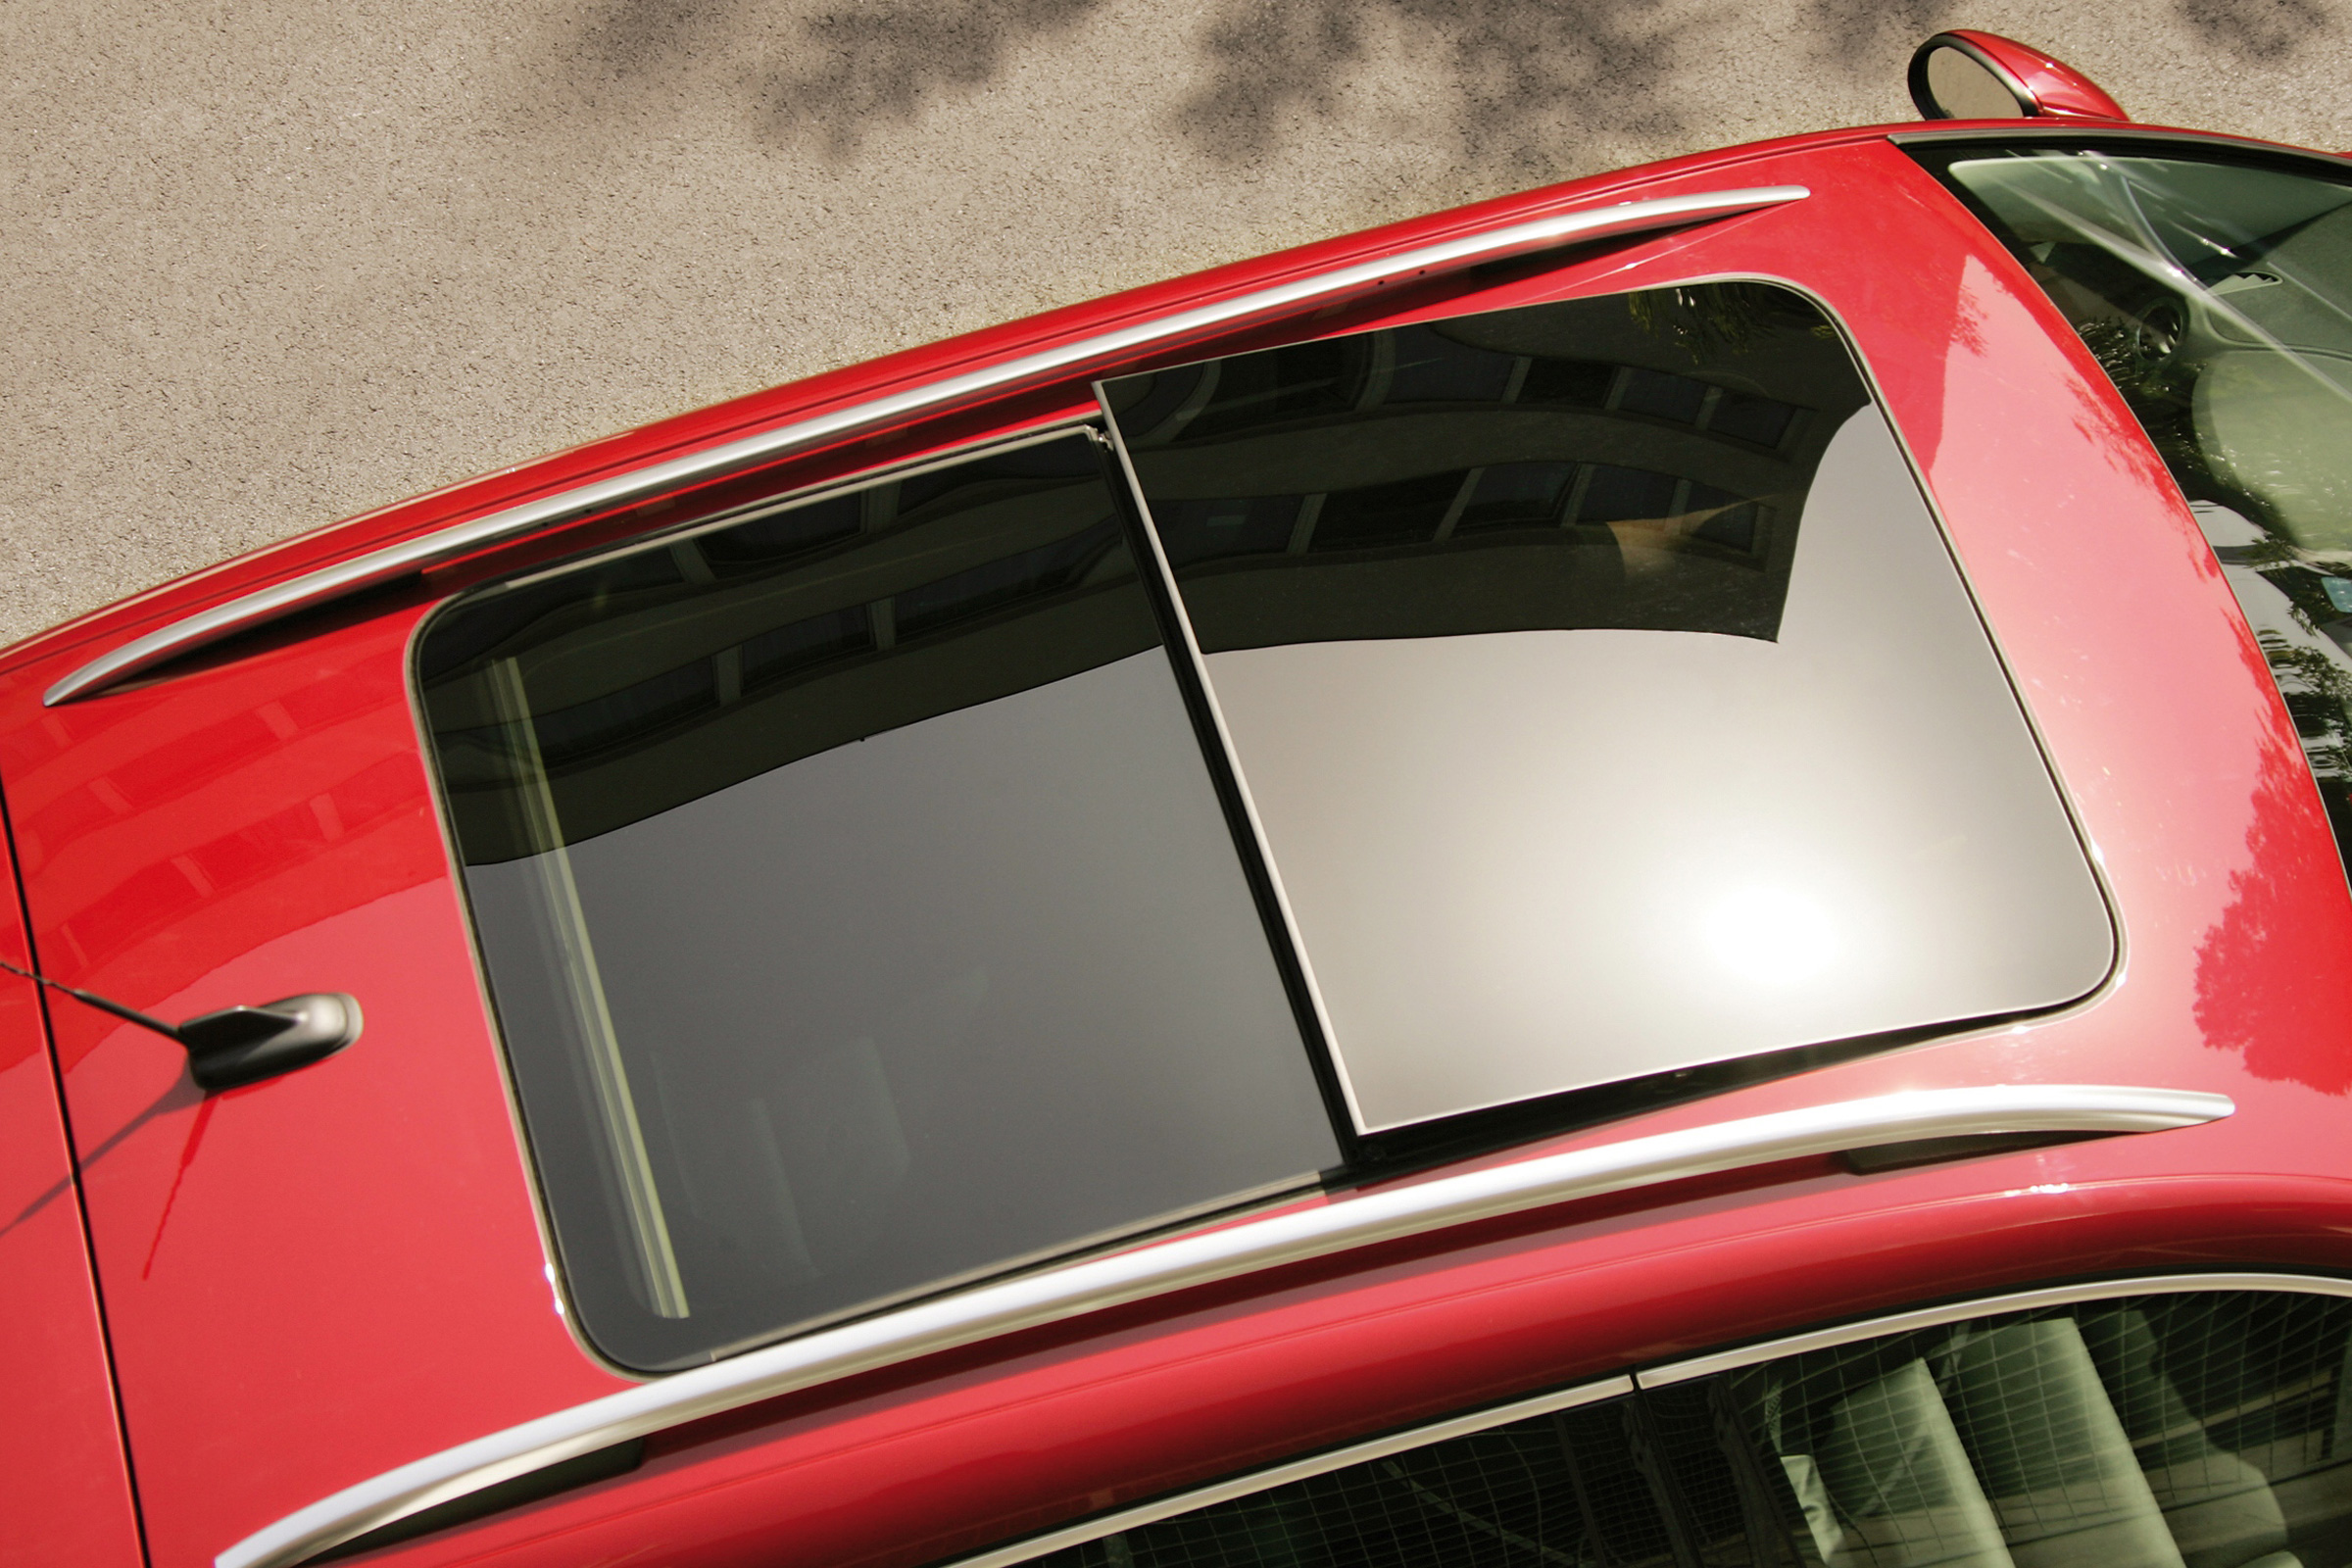 Тигуан люк. Фольксваген Тигуан с панорамной крышей. Volkswagen Tiguan с панорамной крышей. Фольксваген Тигуан панорамный люк. Панорамная крыша Тигуан 2.